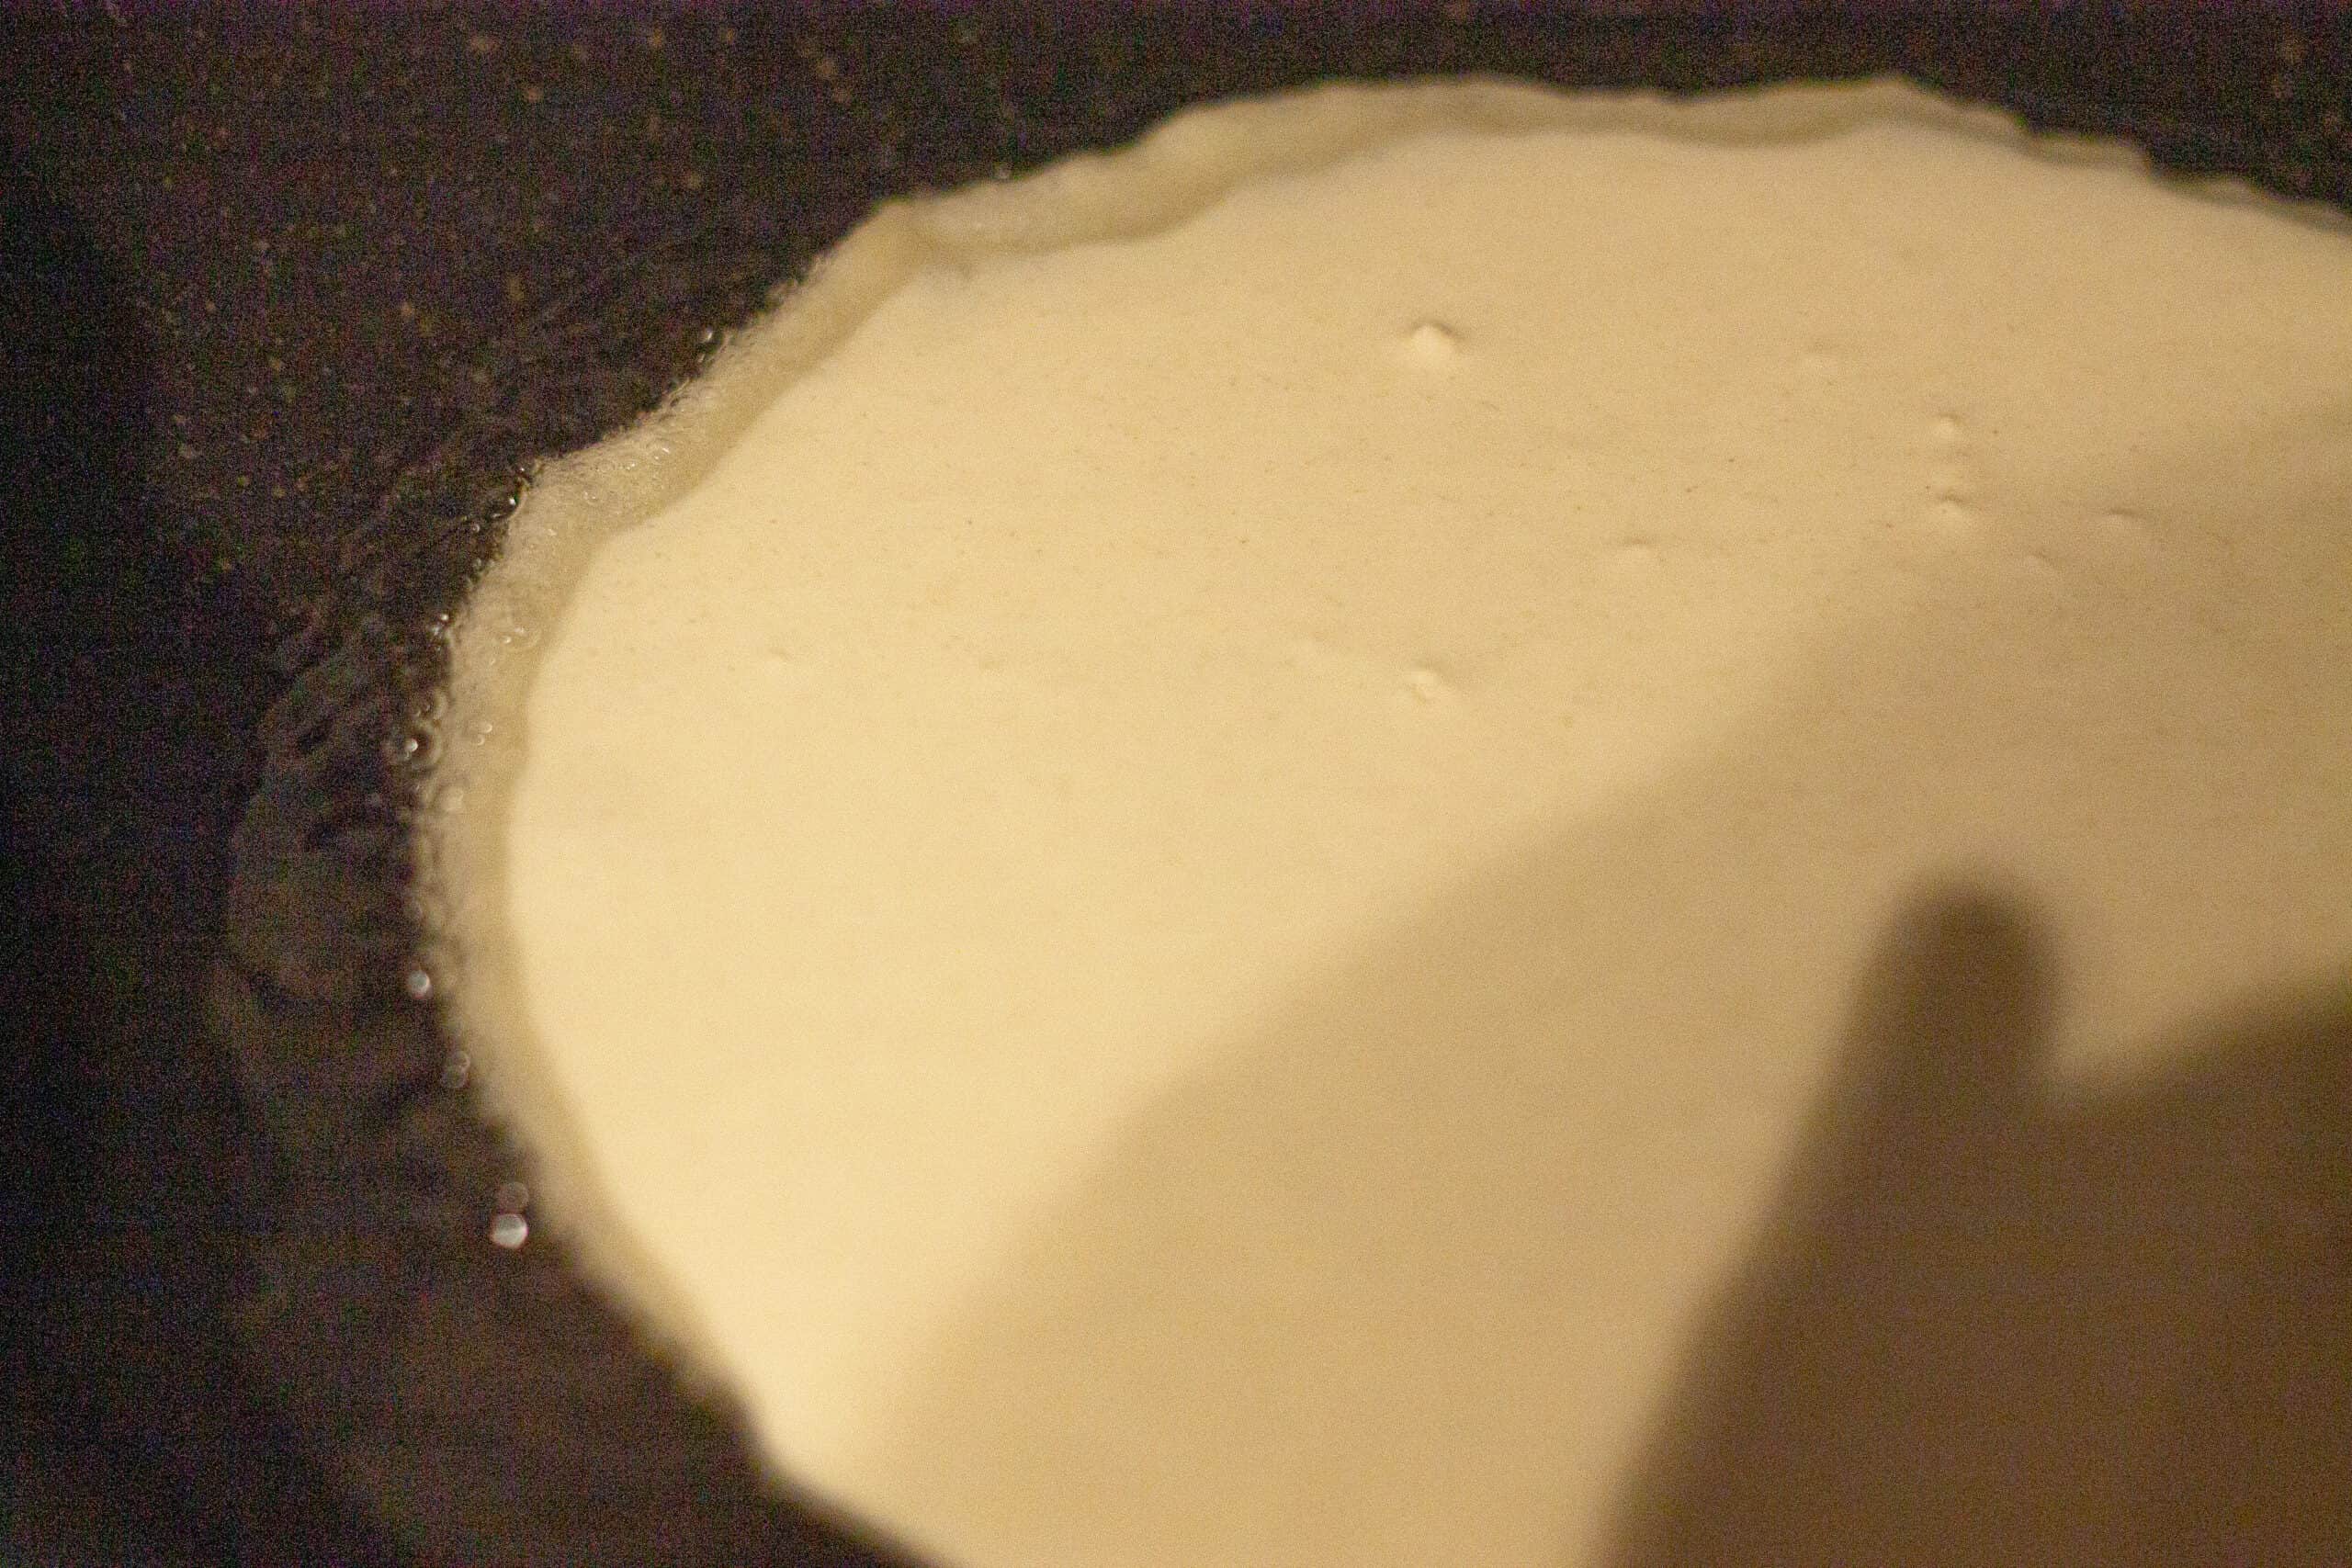 Swirl pancake batter around the pan